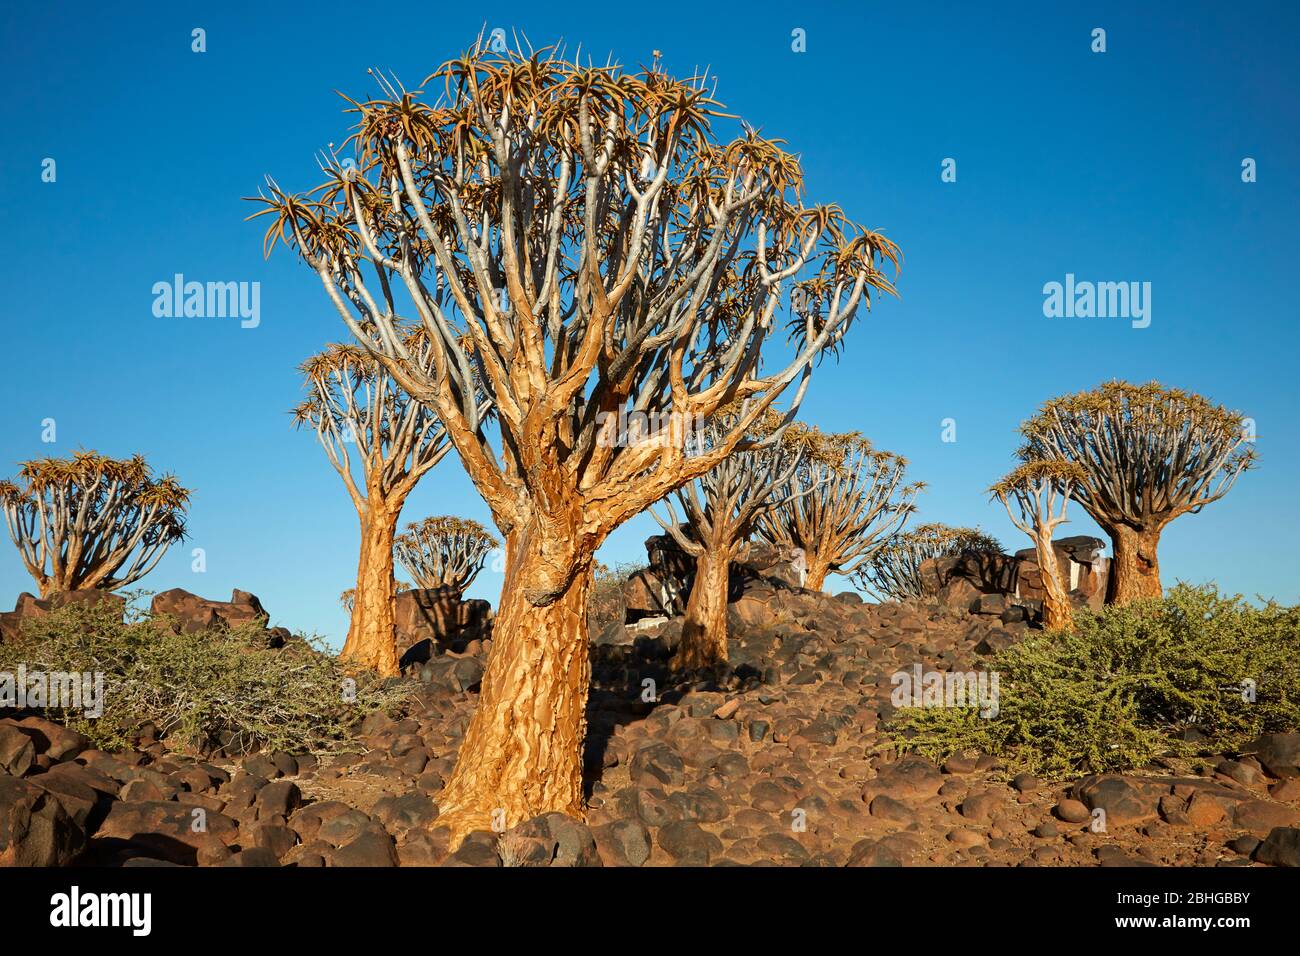 Kokerboom or Quiver Trees (Aloidendron dichotomum), Mesosaurus Fossil Camp, near Keetmanshoop, Namibia, Africa Stock Photo